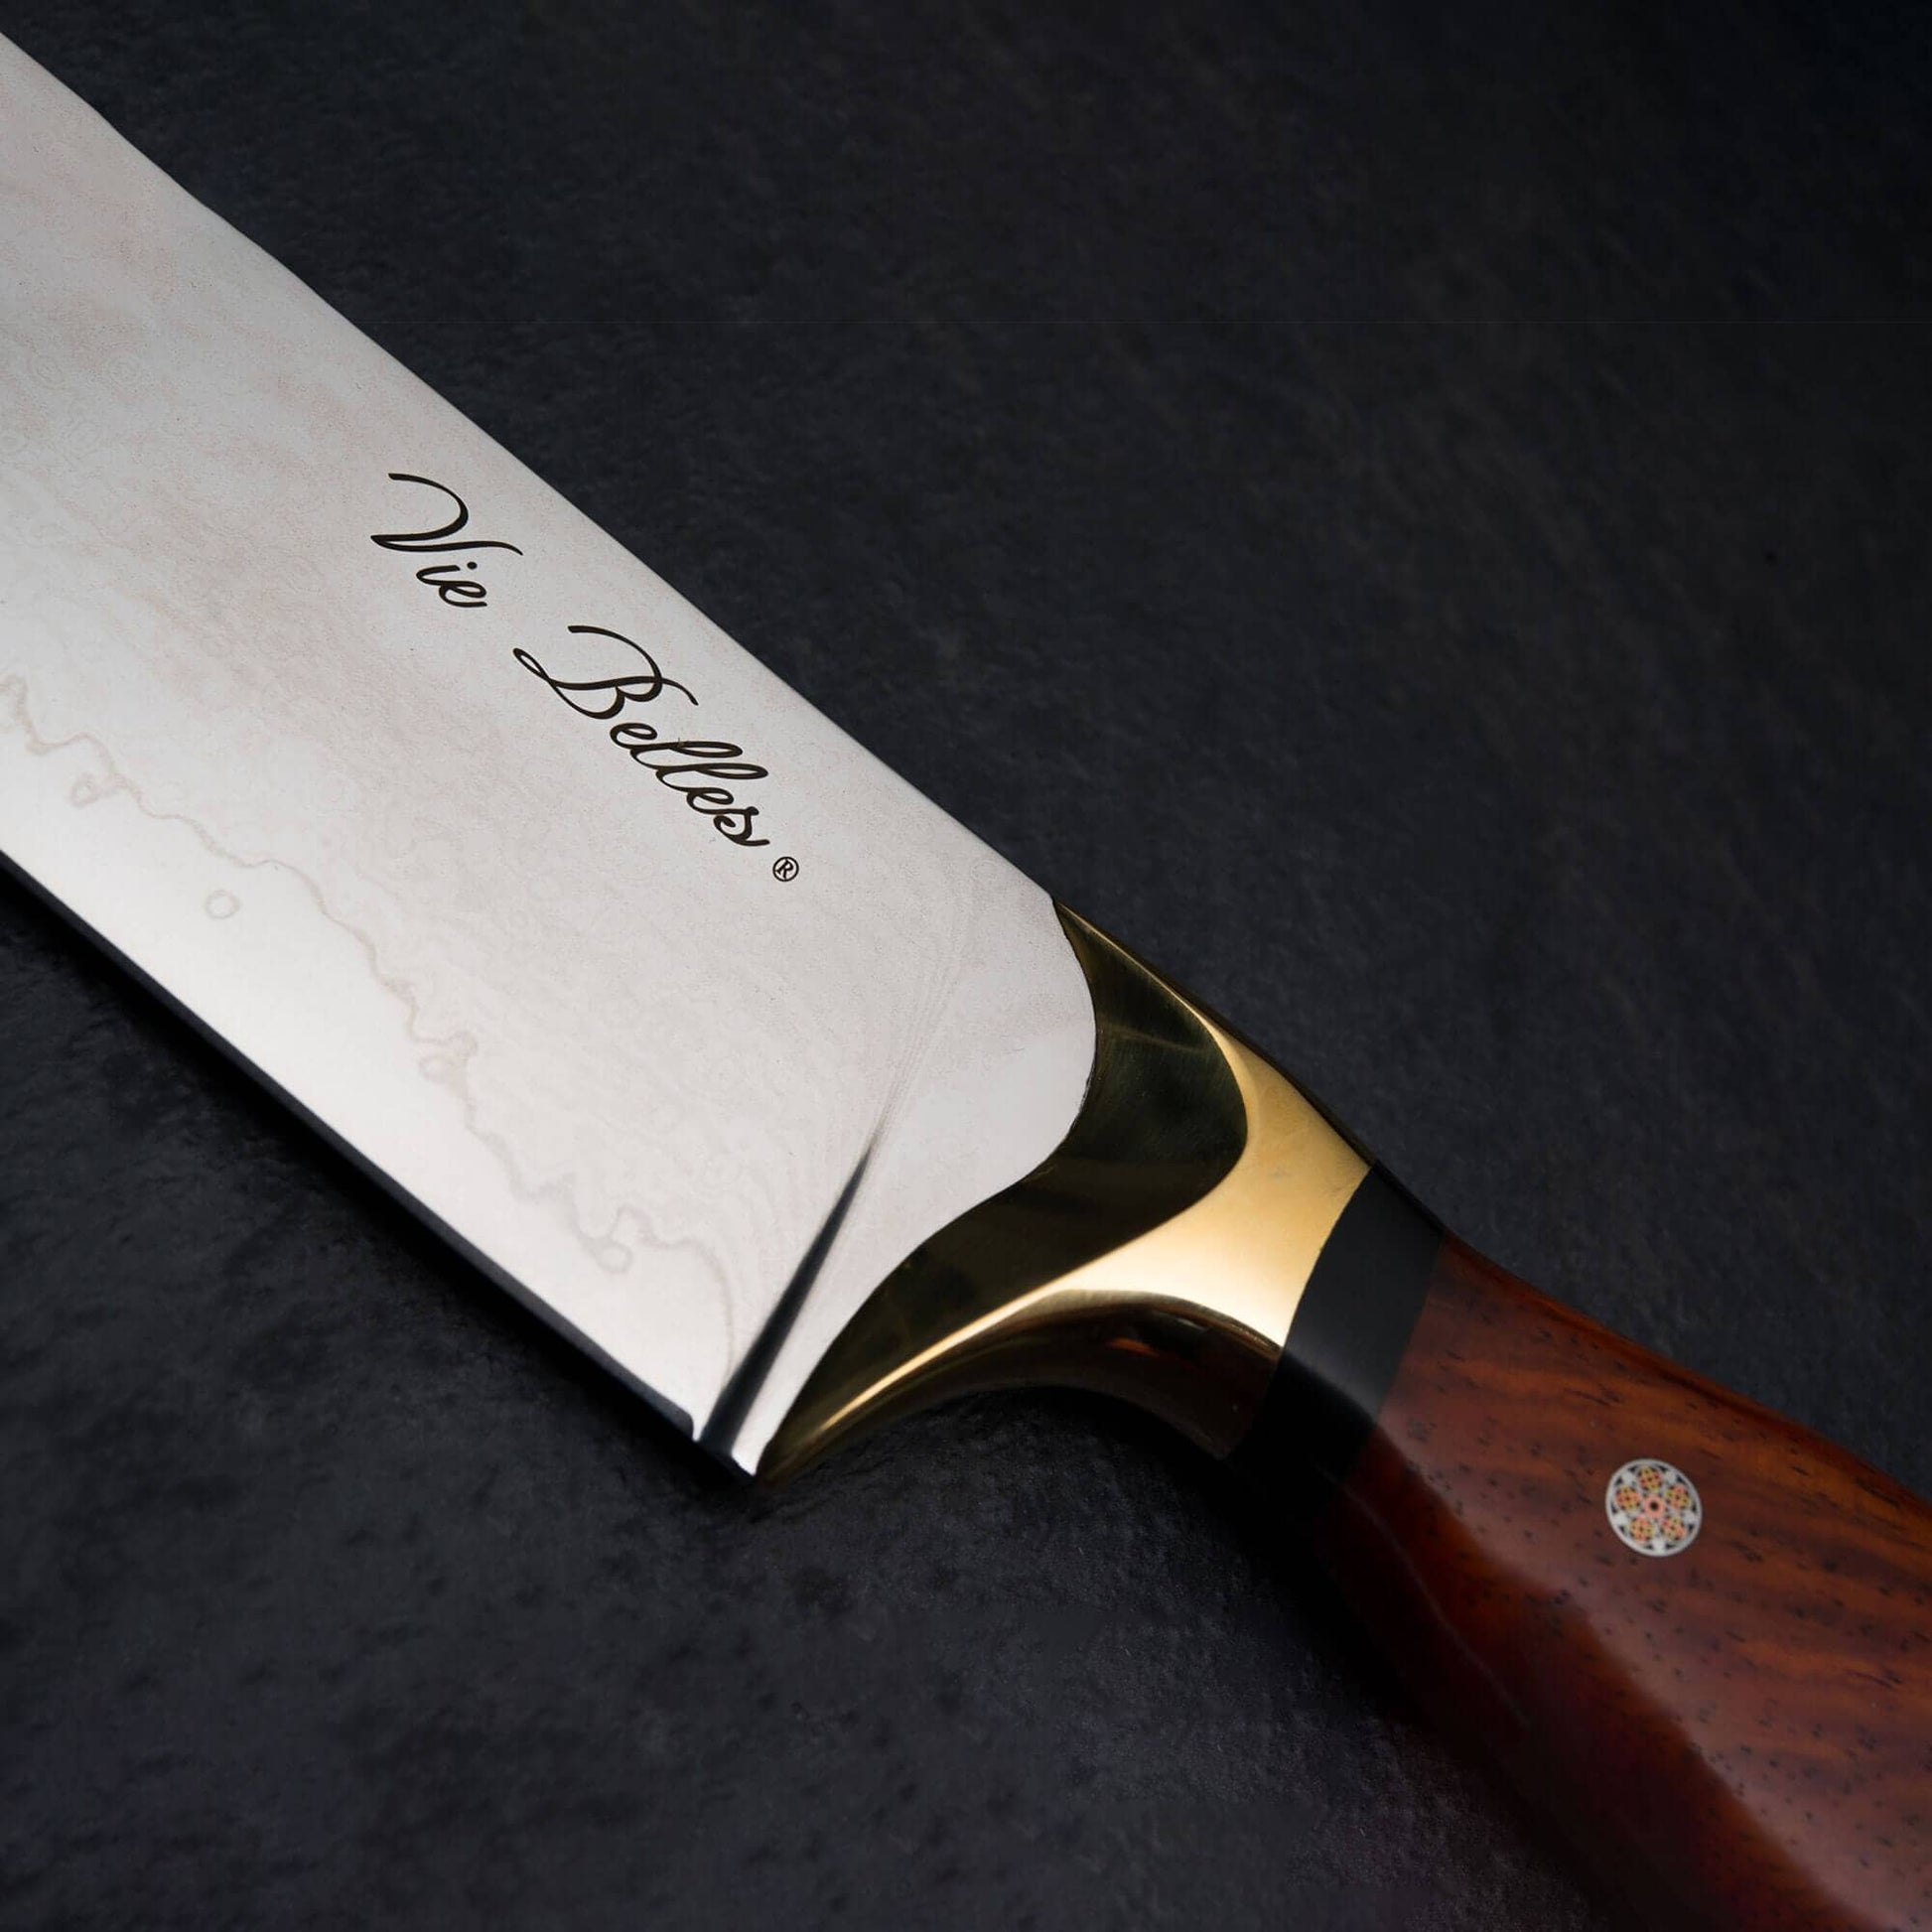 Luxury Pro Chef's Knife. 8-inch